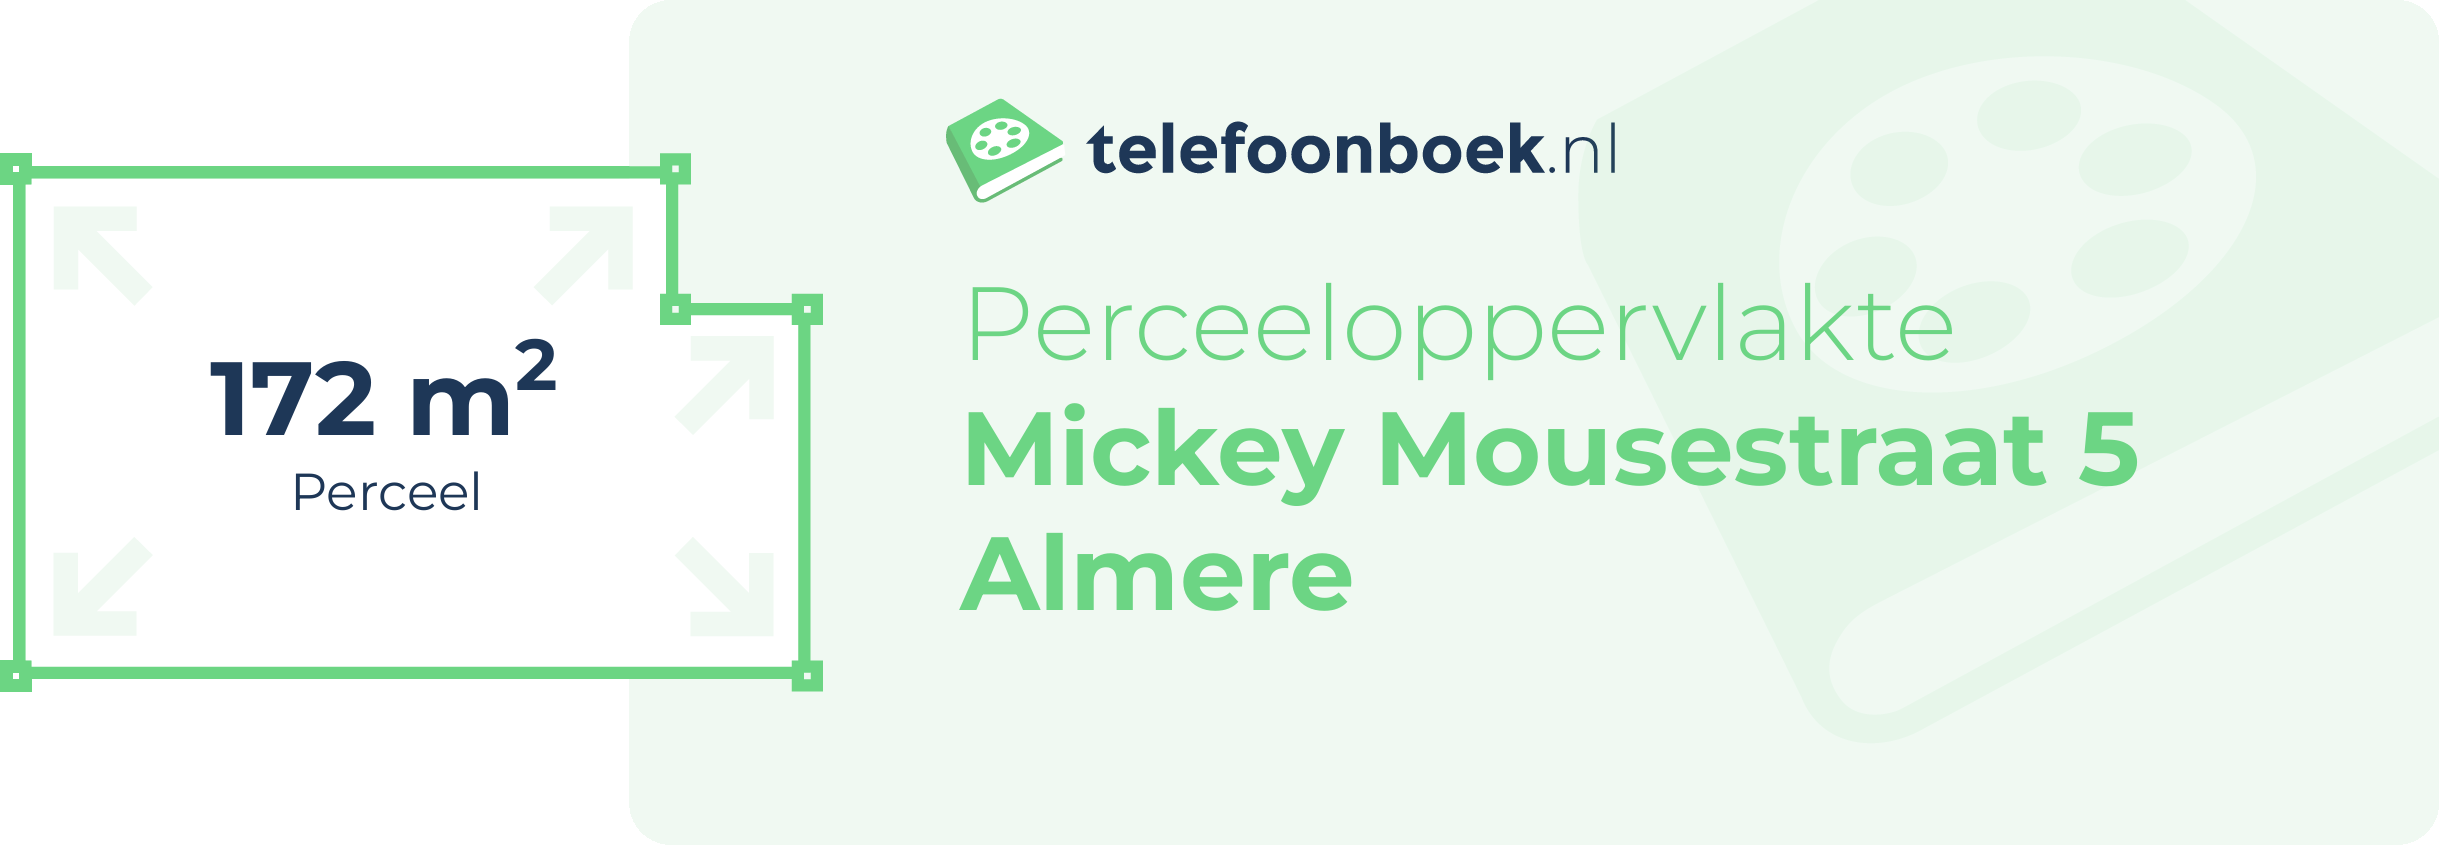 Perceeloppervlakte Mickey Mousestraat 5 Almere